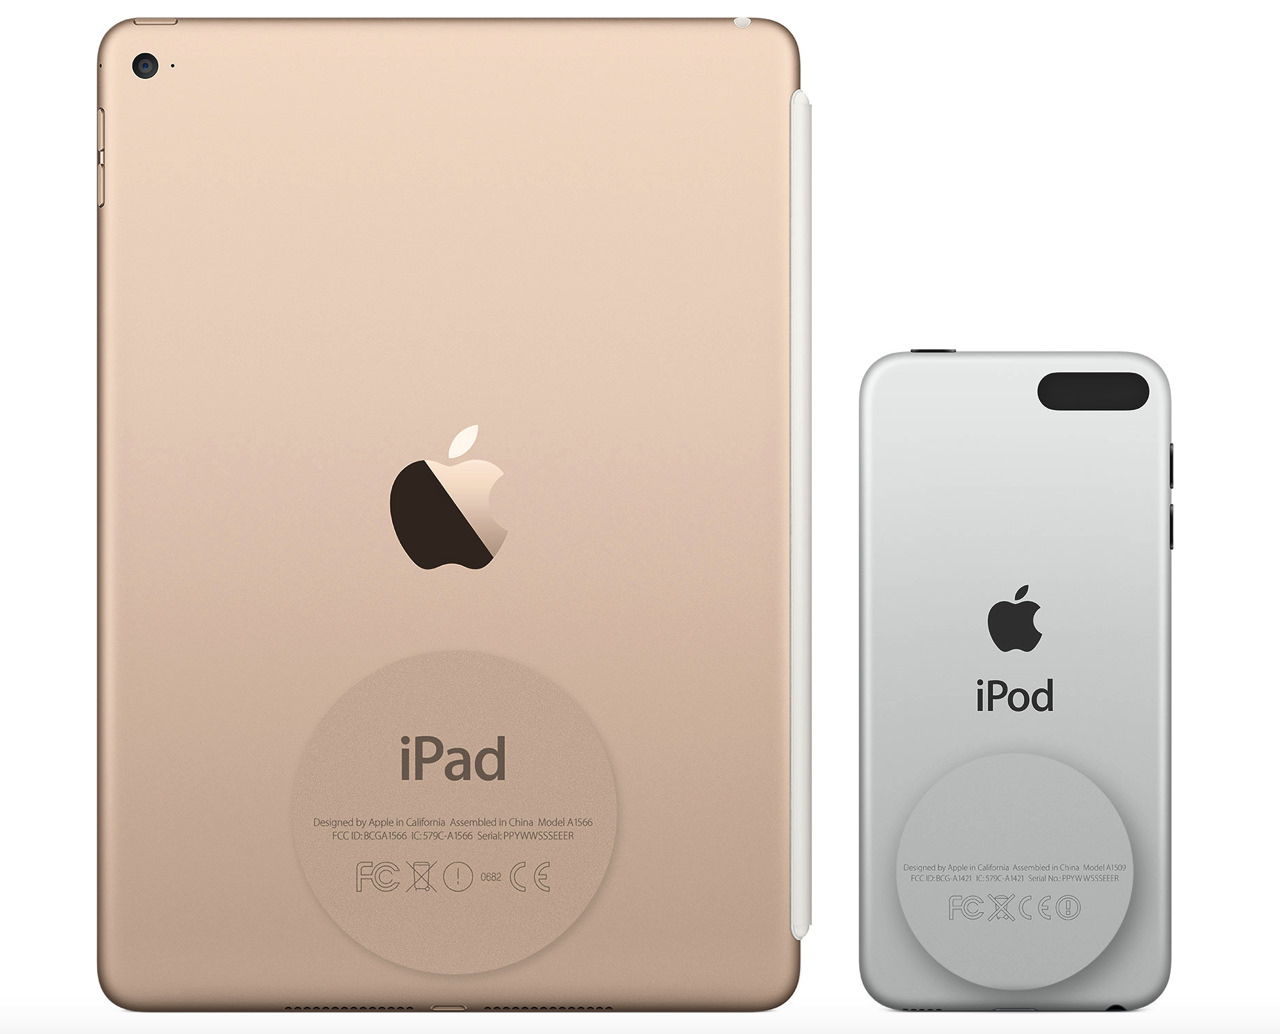 iPad,iPod Touch の本体背面でシリアル番号を確認